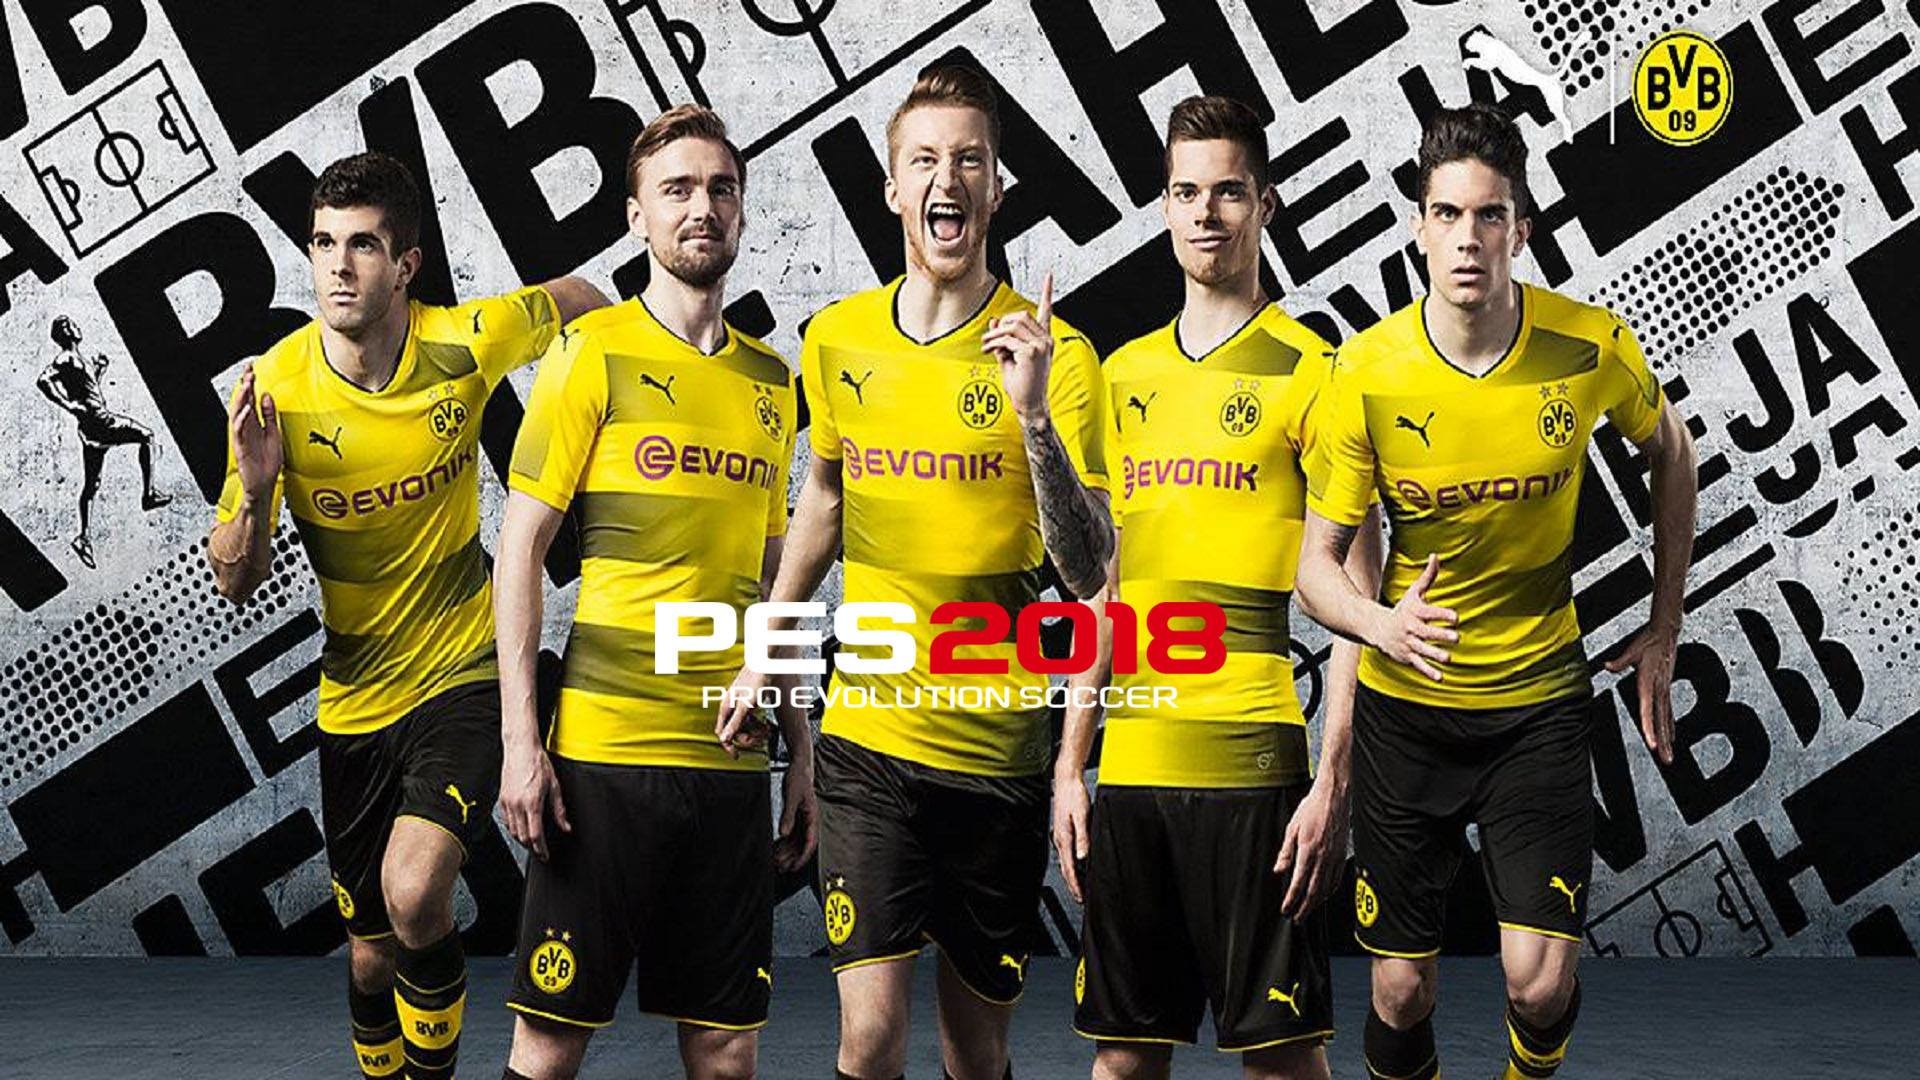 Startscreen Bvb Pes 2018 For Pes 2017 By Ad Mod S - Borussia Dortmund Wallpaper 2018 - HD Wallpaper 